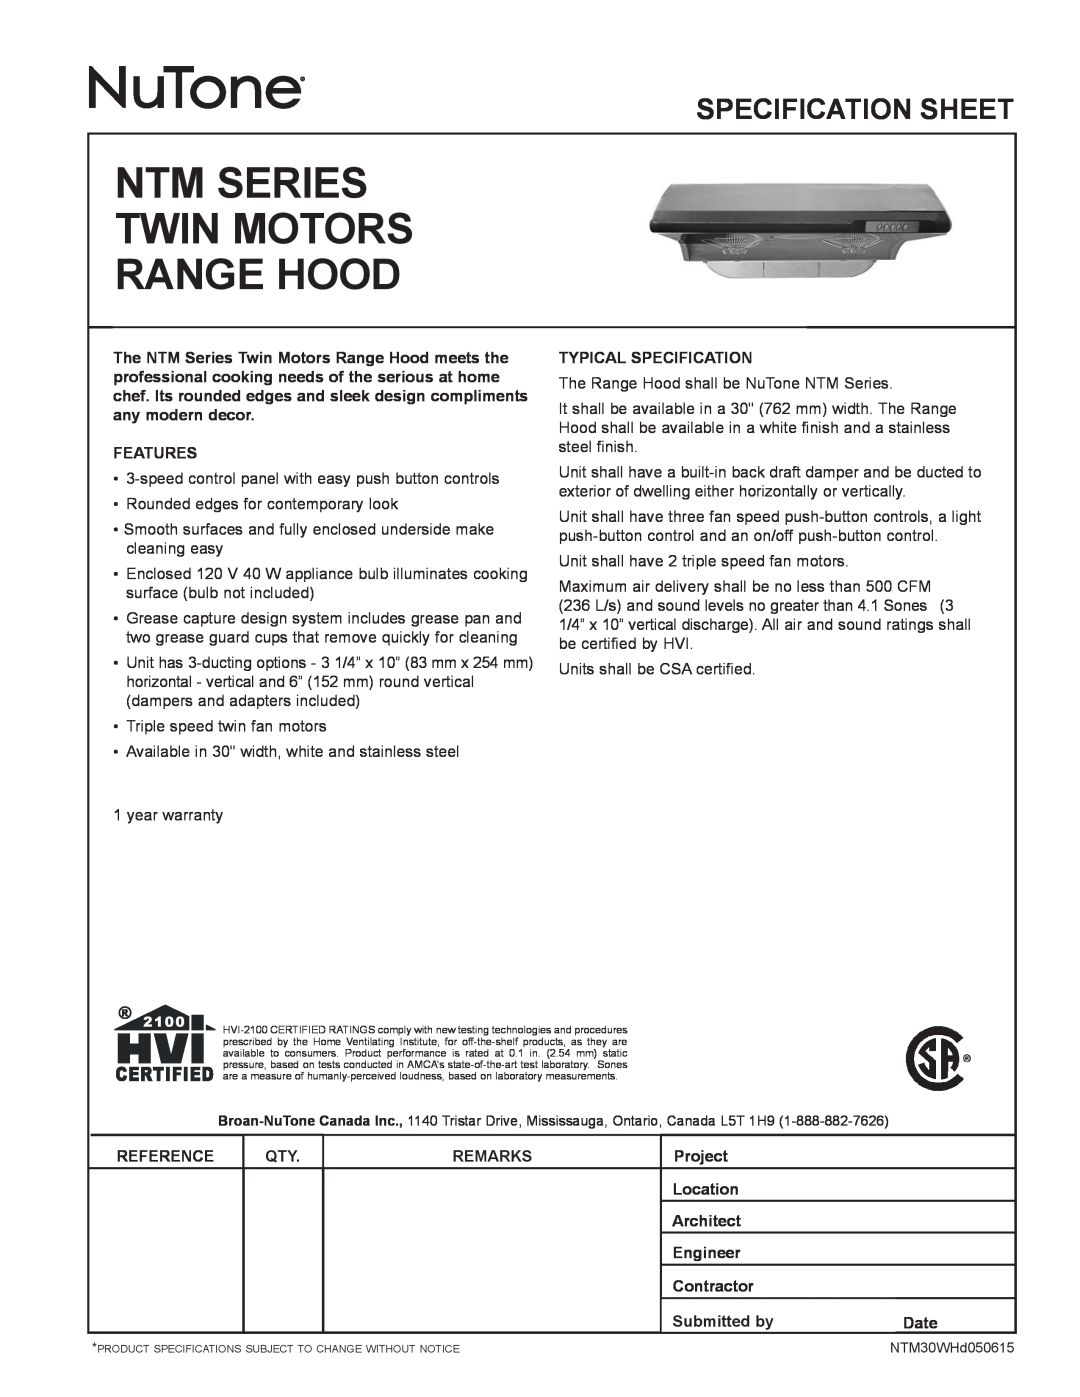 NuTone NTM Series specifications Ntm Series Twin Motors Range Hood, Specification Sheet 